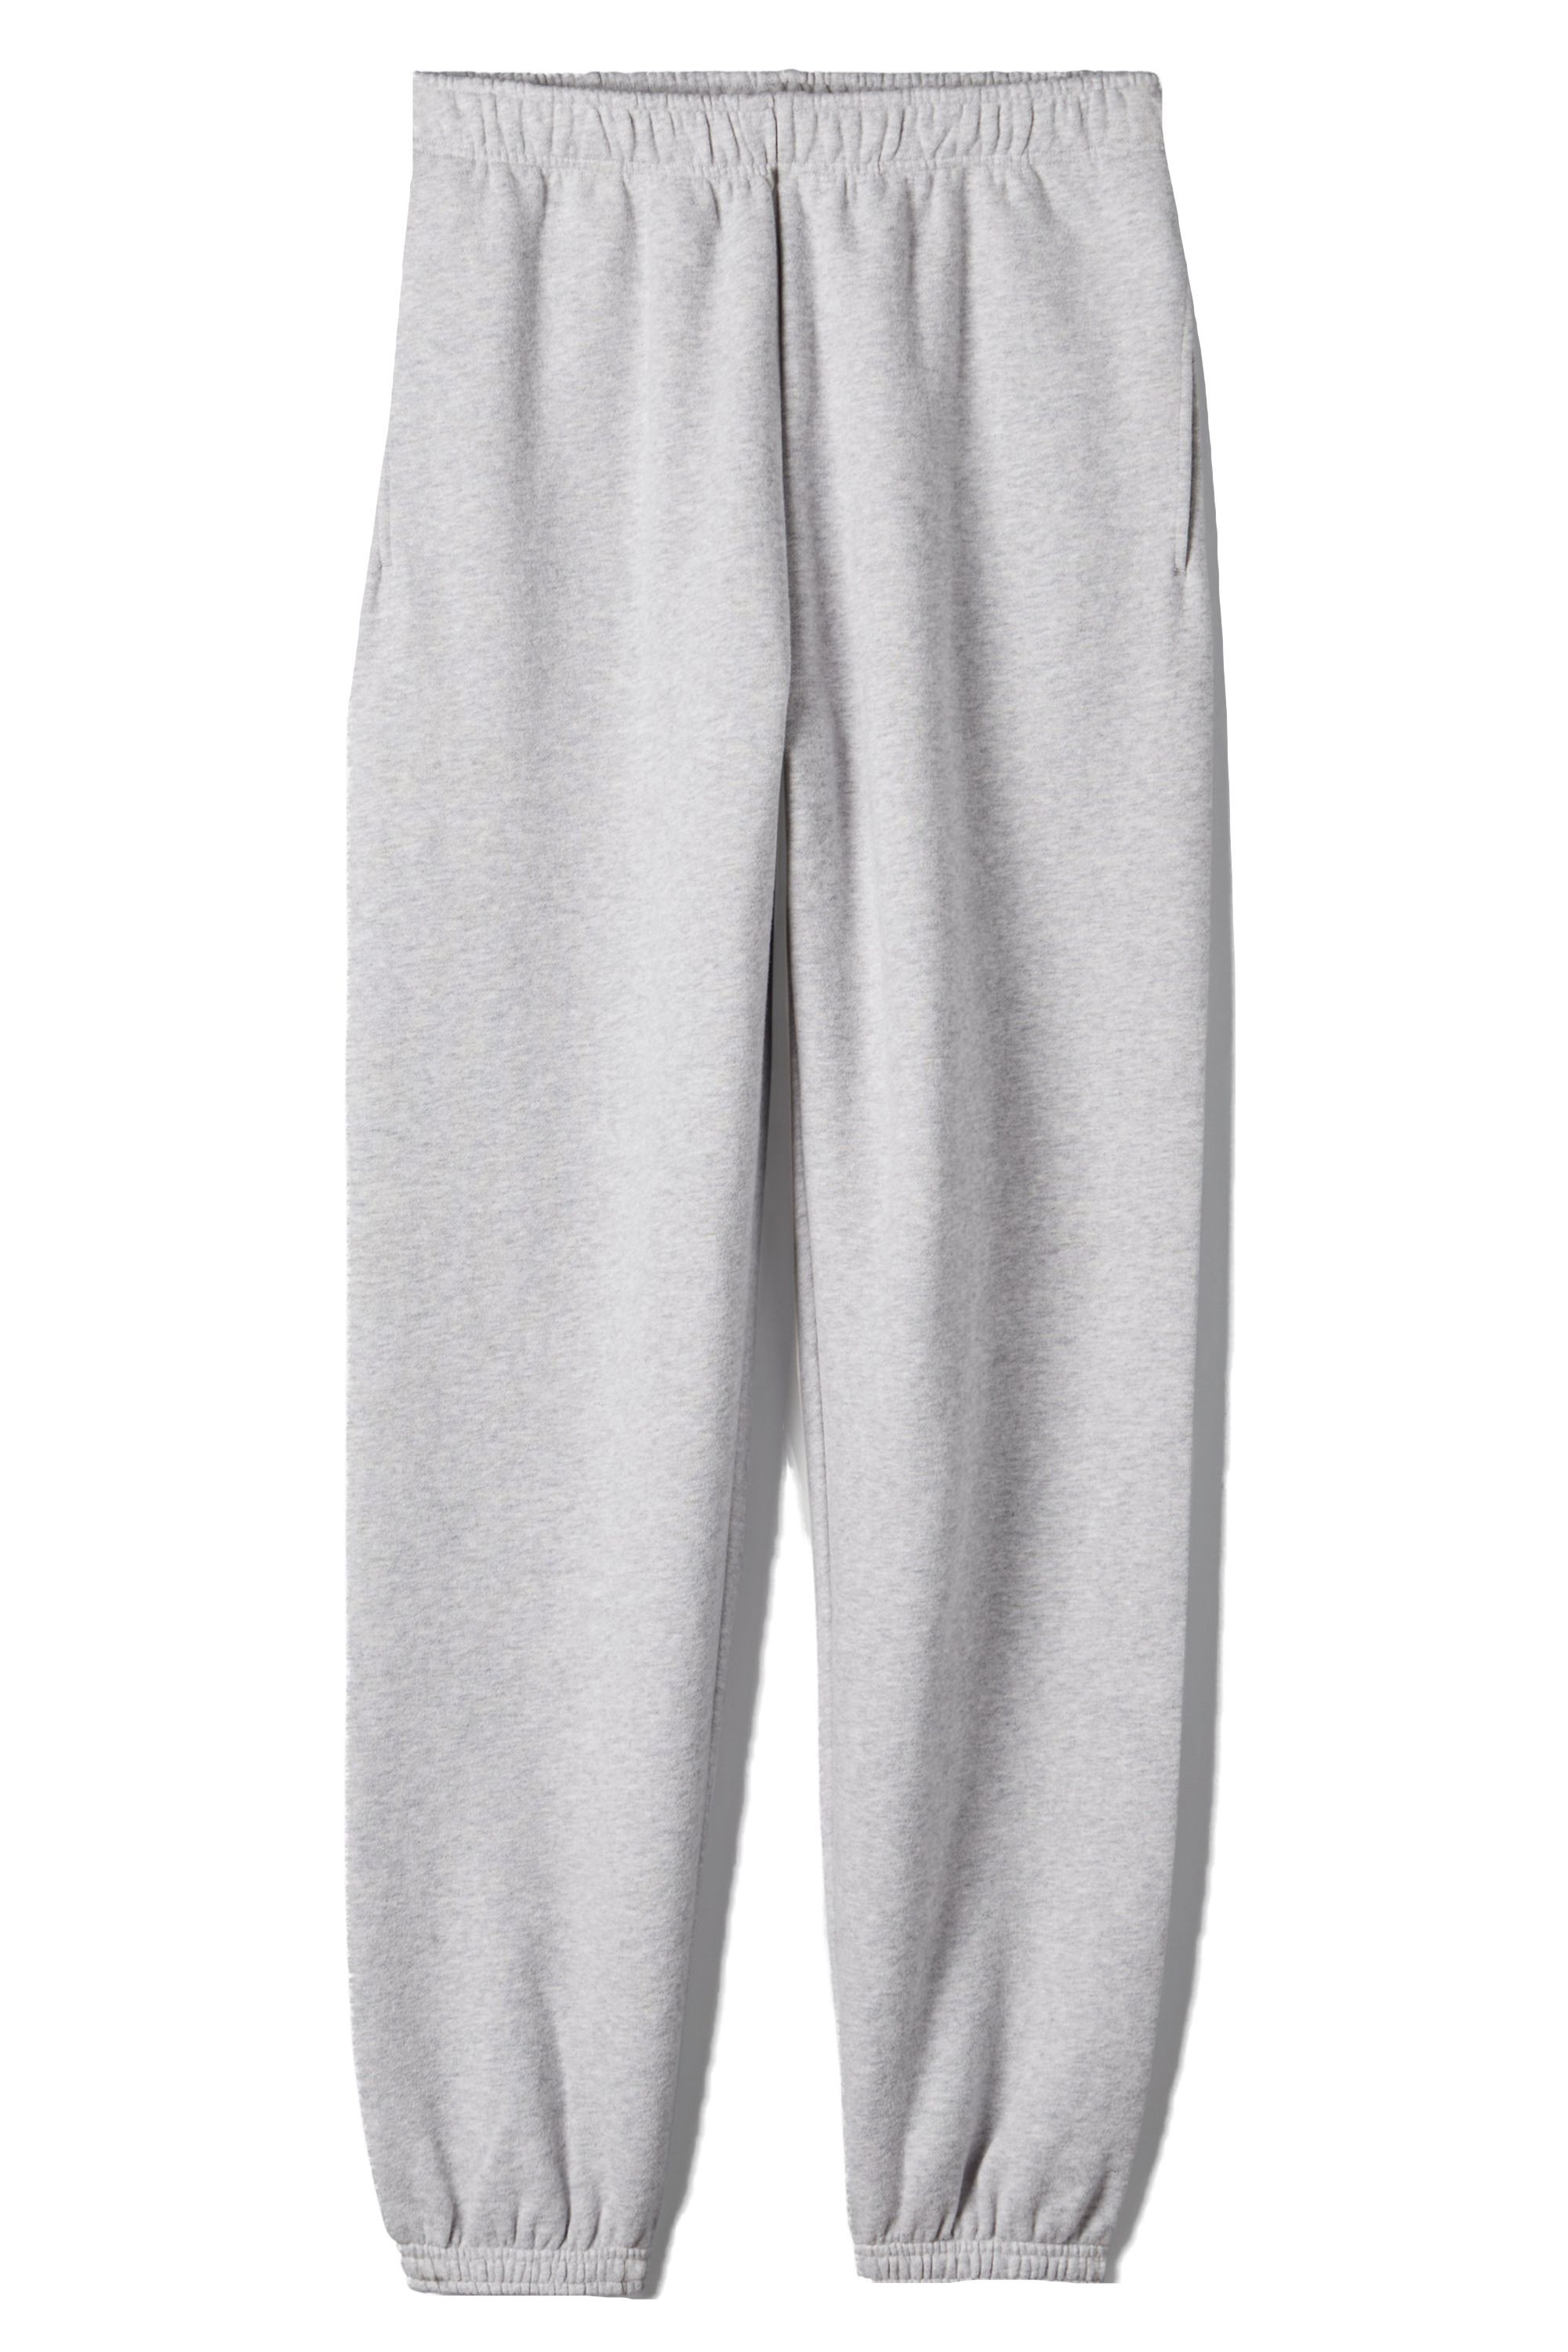 gray sweatpants womens